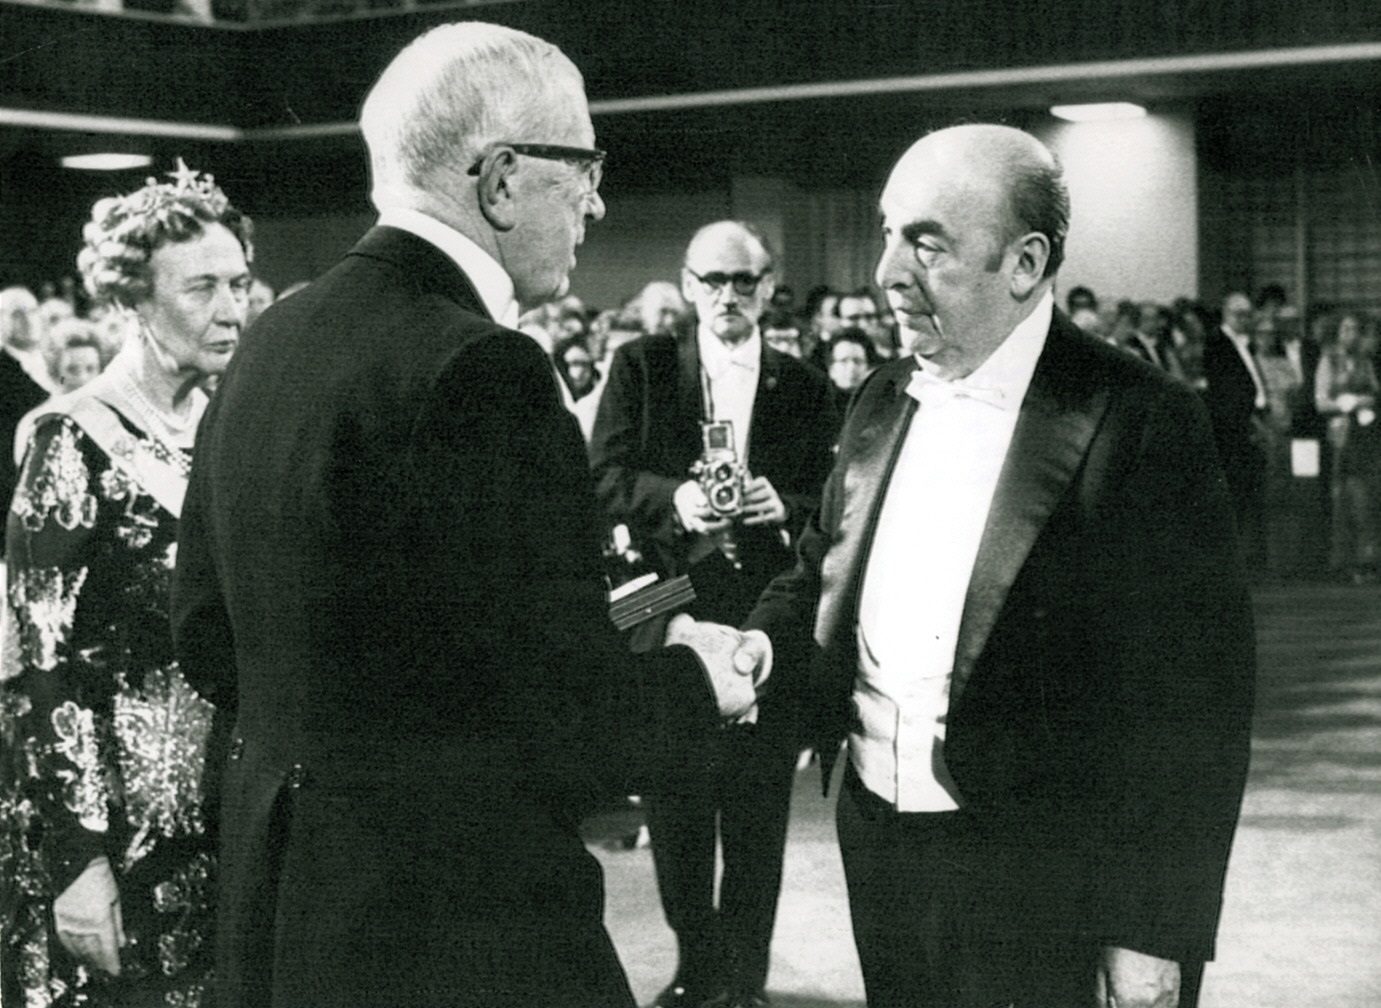 File photo dated December 10, 1971 shows Chilean poet Pablo Neruda receiving the Nobel Prize for Literature from King Gustavo Adolfo (I) of Sweden, in Stockholm, Sweden.  EFE / UPI